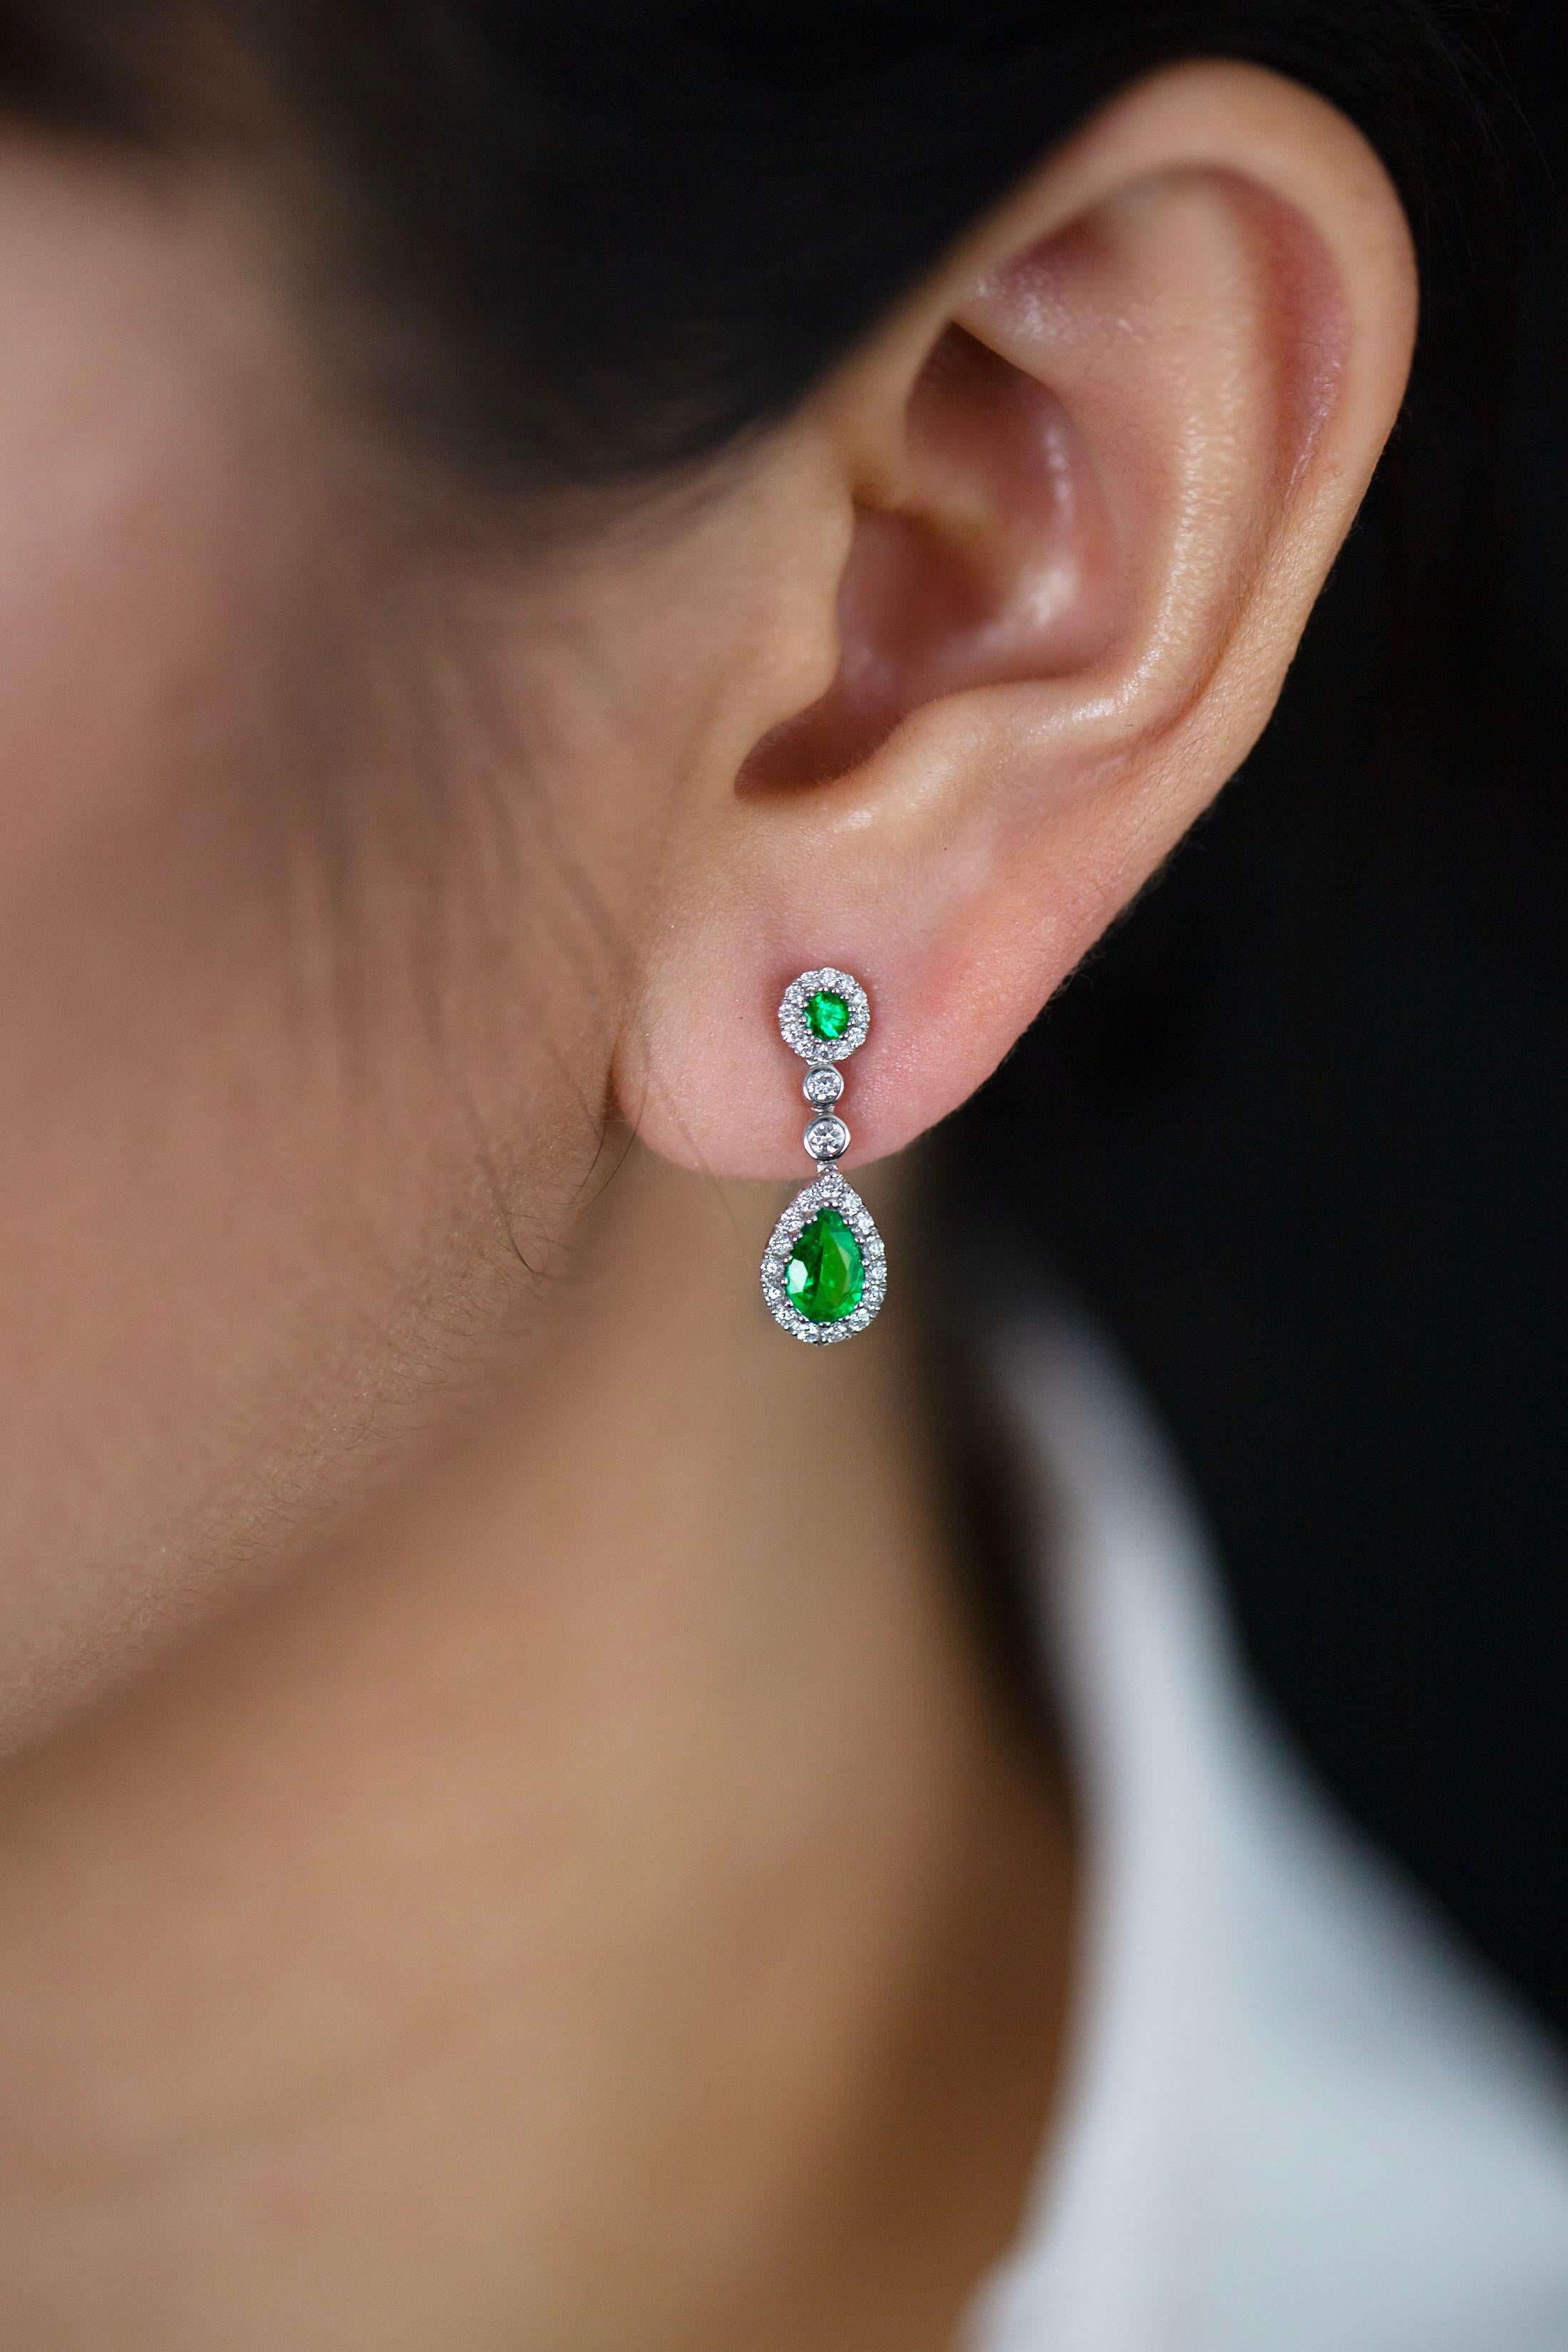 0,66 Karat Total Mixed Cut Kolumbianischer Grüner Smaragd & Diamant Ohrringe Damen im Angebot